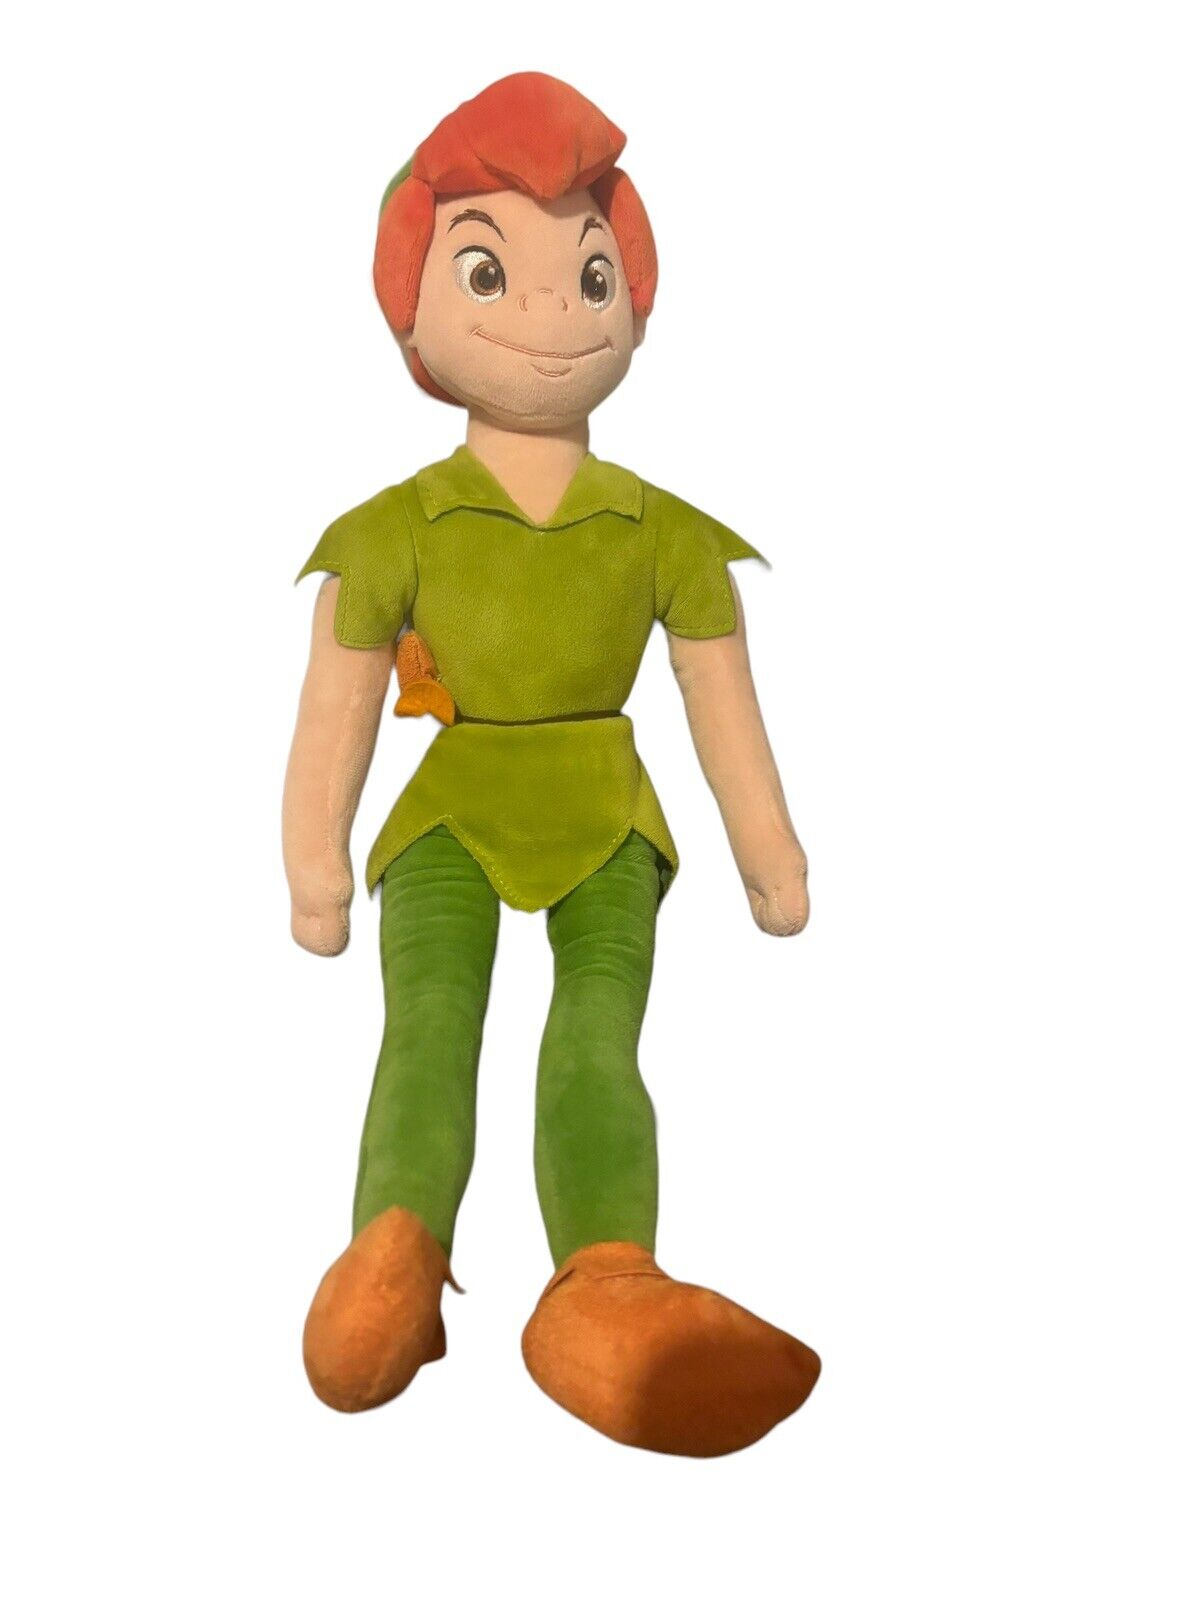 Disney Store Peter Pan 22” Large Green Stuffed Plush Doll